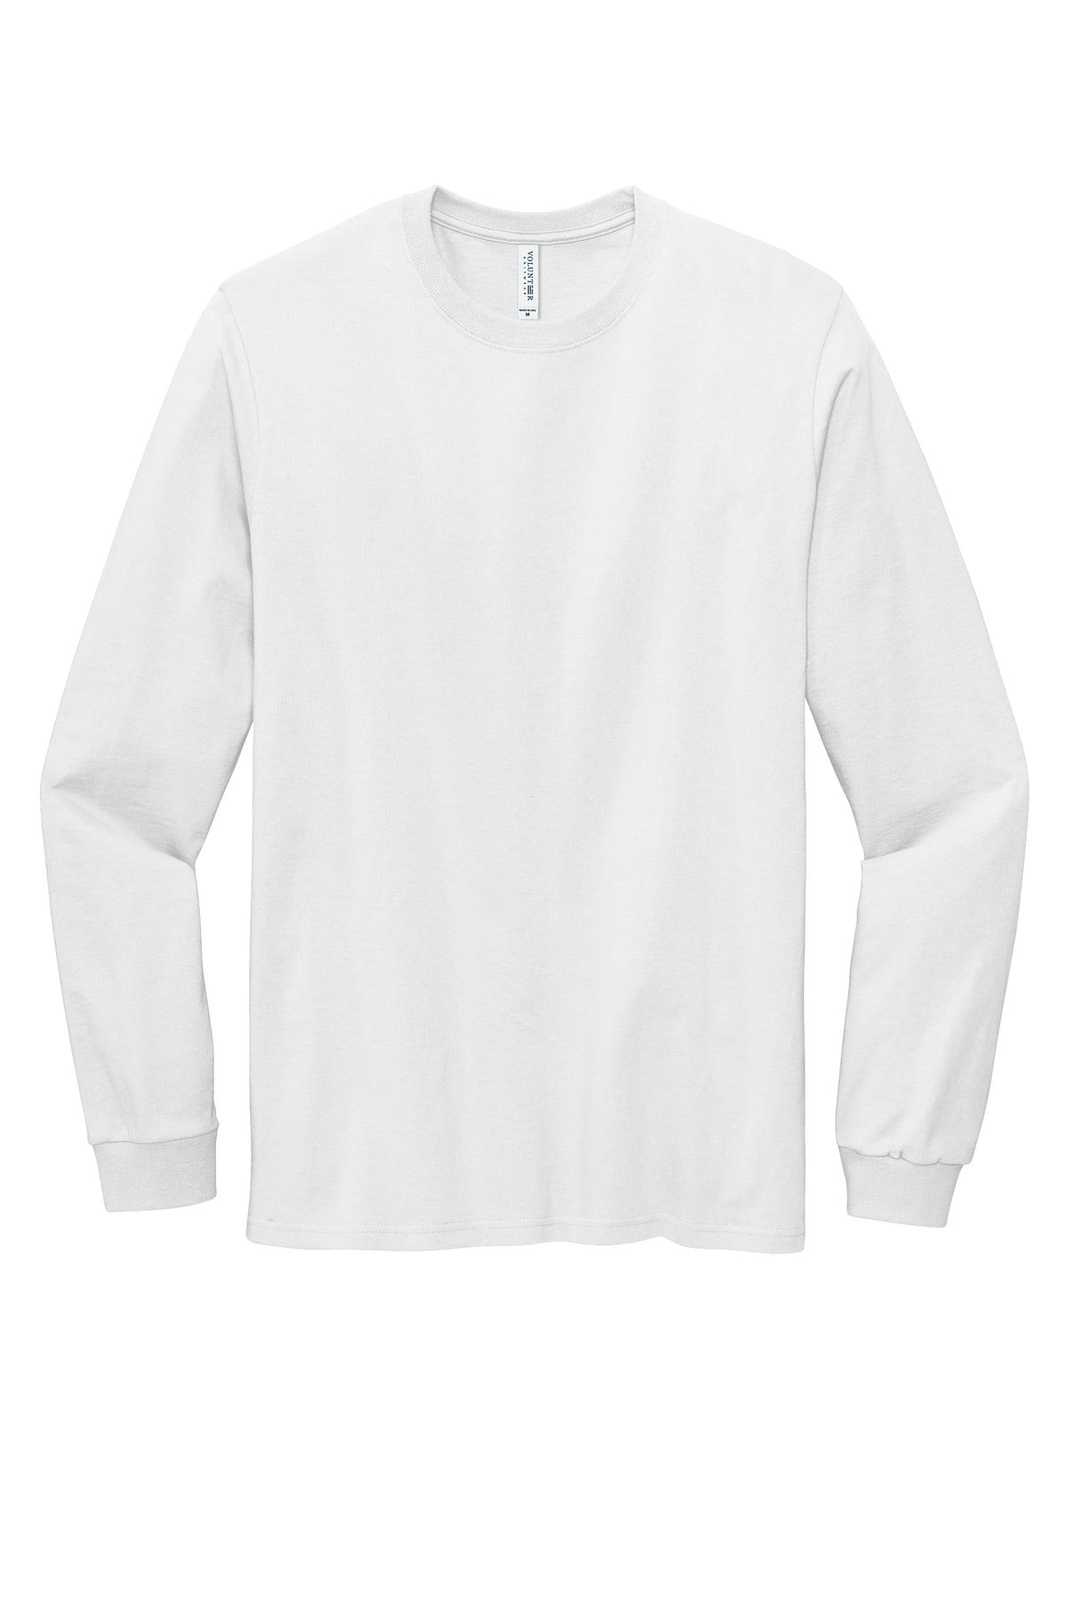 Volunteer Knitwear VL100LS All-American Long Sleeve Tee - White - HIT a Double - 1